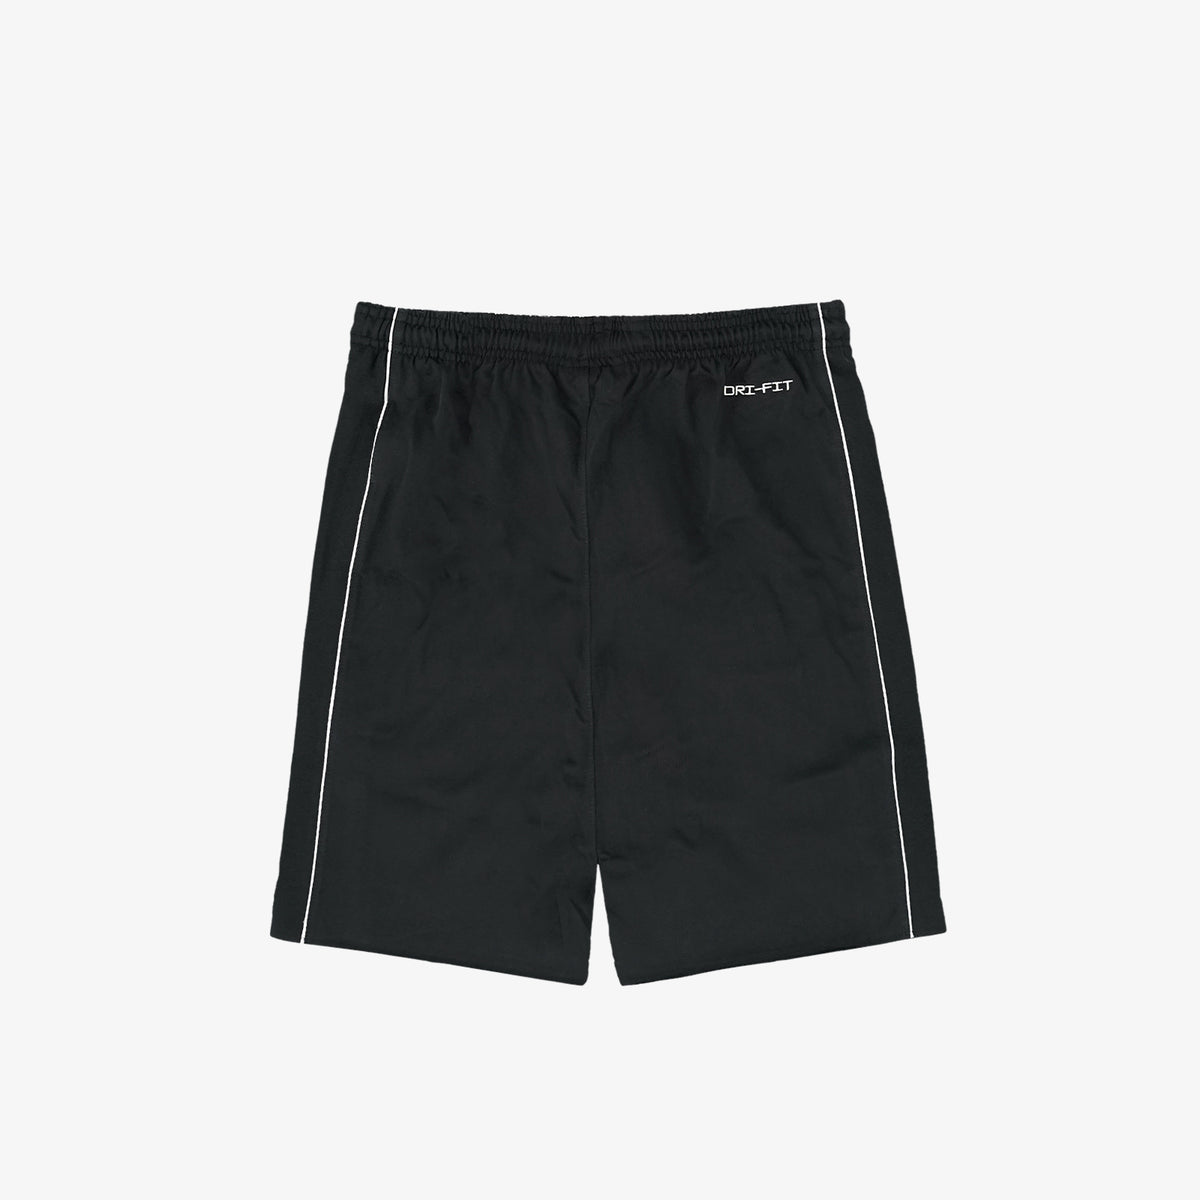 Standard Issue Fleece Shorts - Black - Throwback